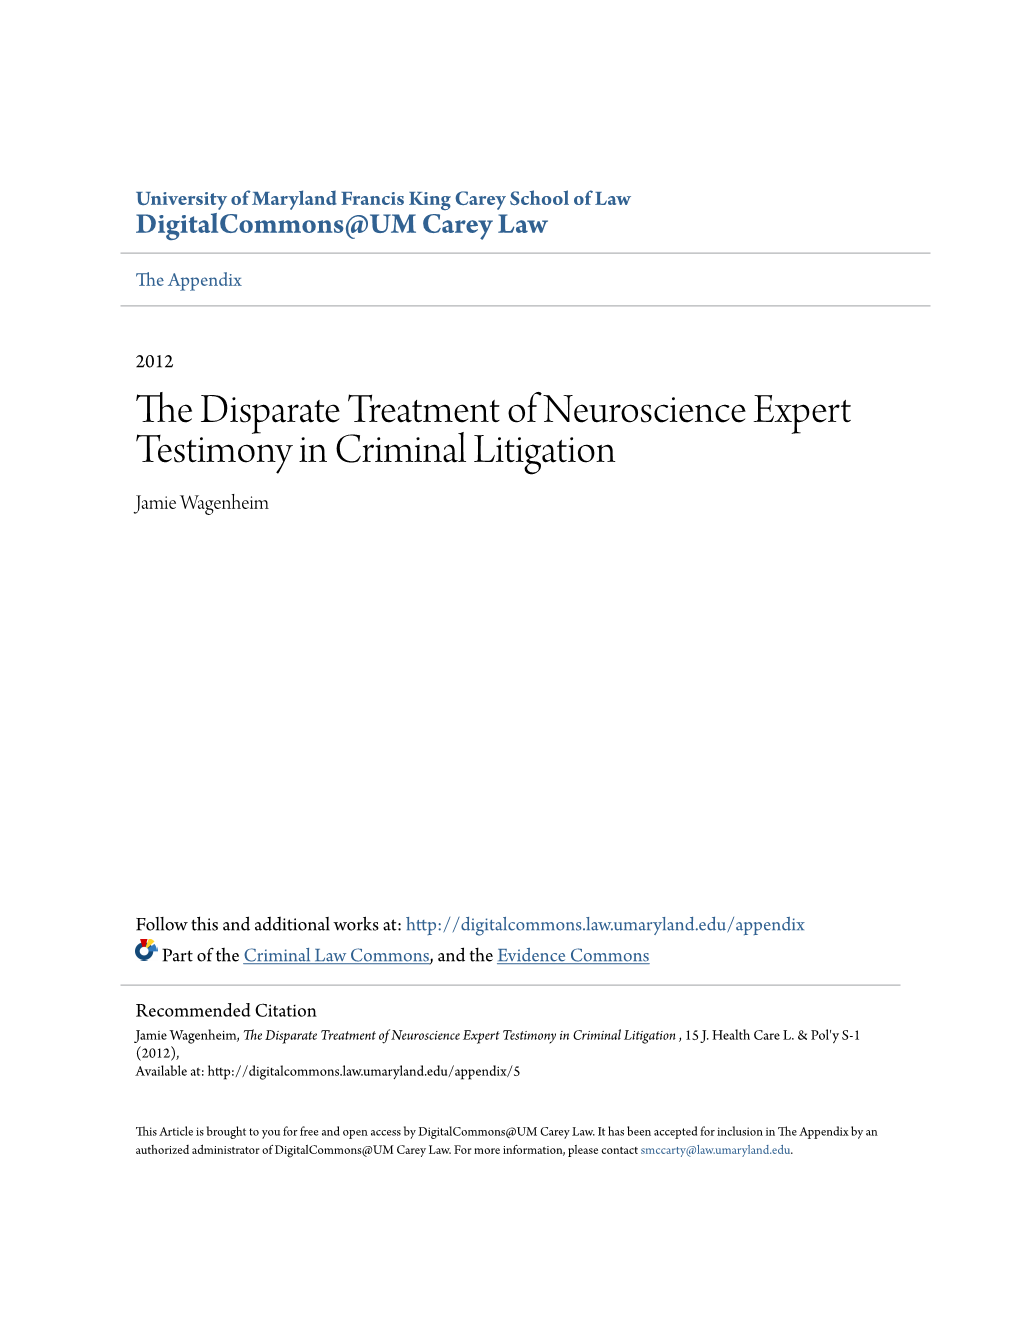 The Disparate Treatment of Neuroscience Expert Testimony in Criminal Litigation Jamie Wagenheim